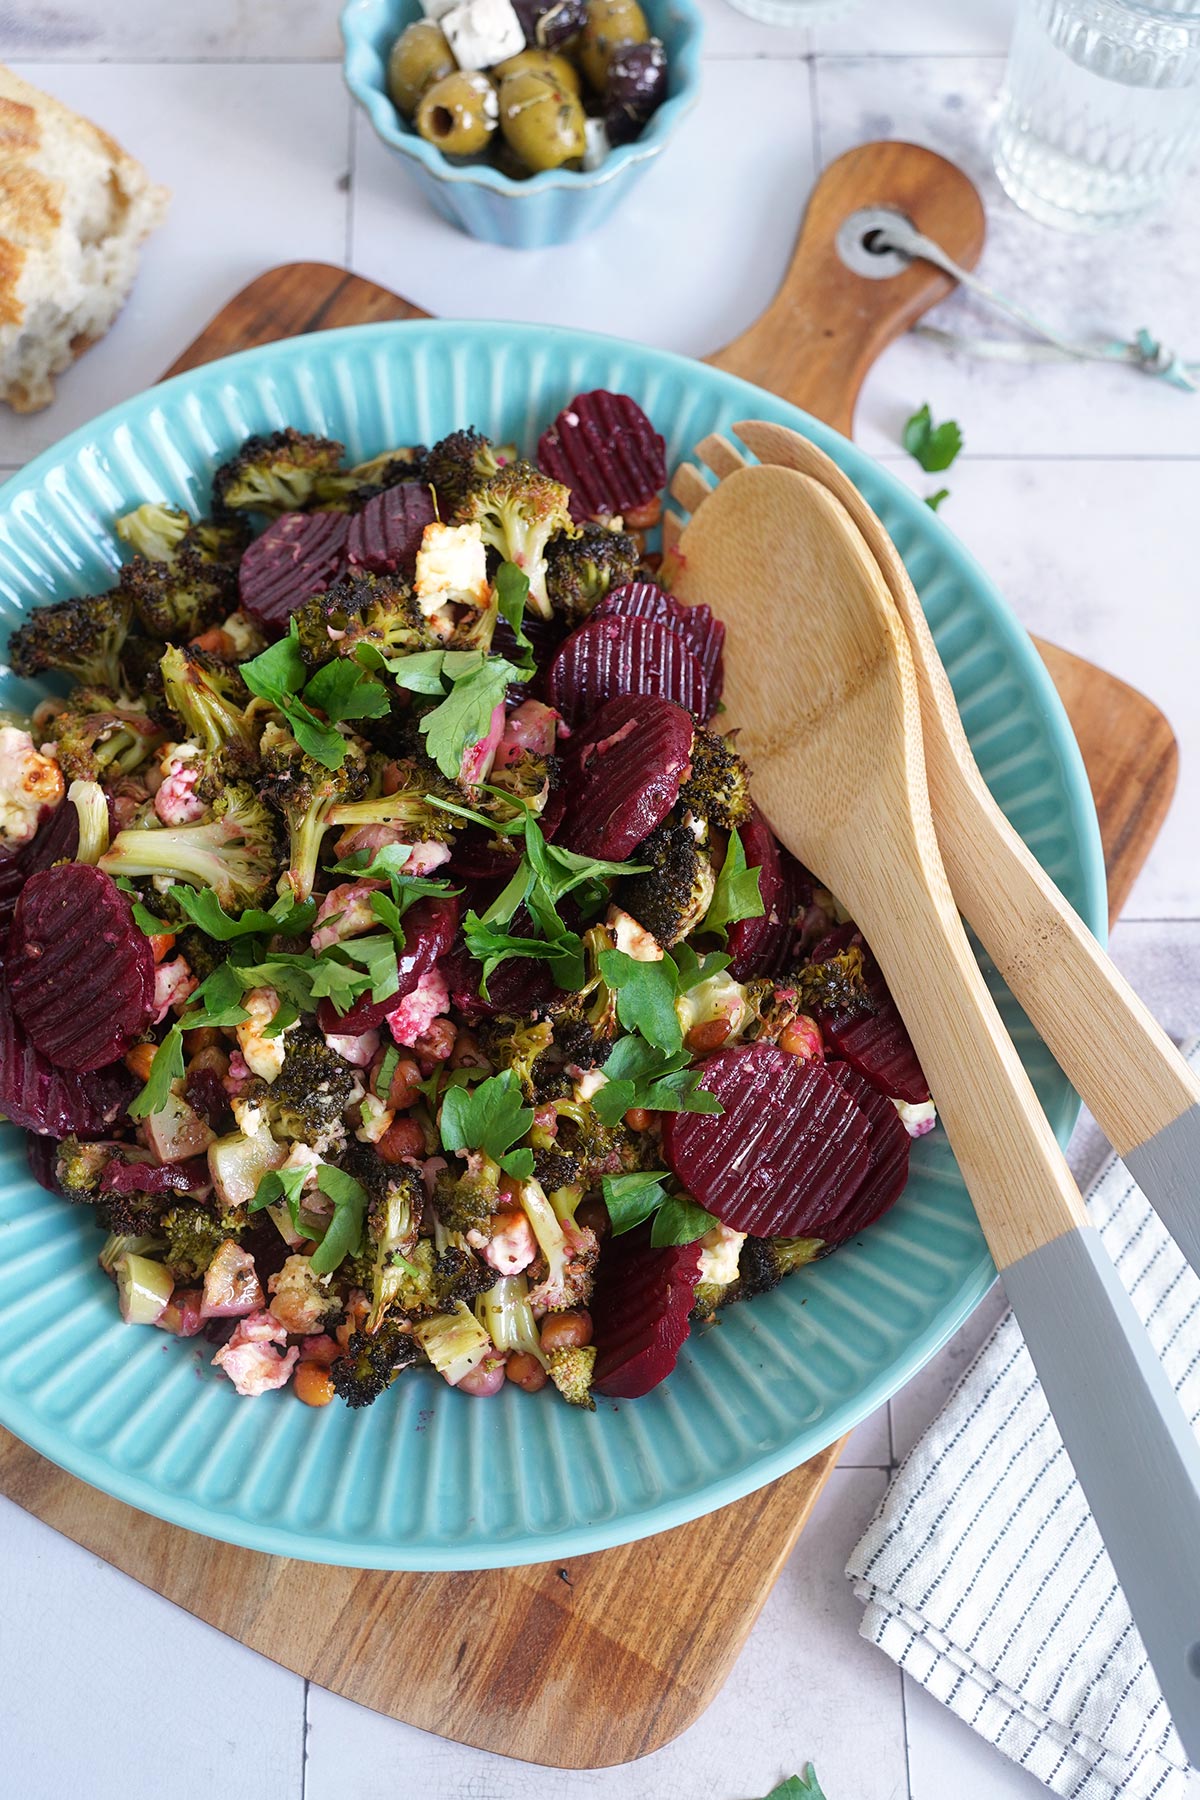 Salat mit geröstetem Brokkoli, Kichererbsen & Feta | Bake to the roots